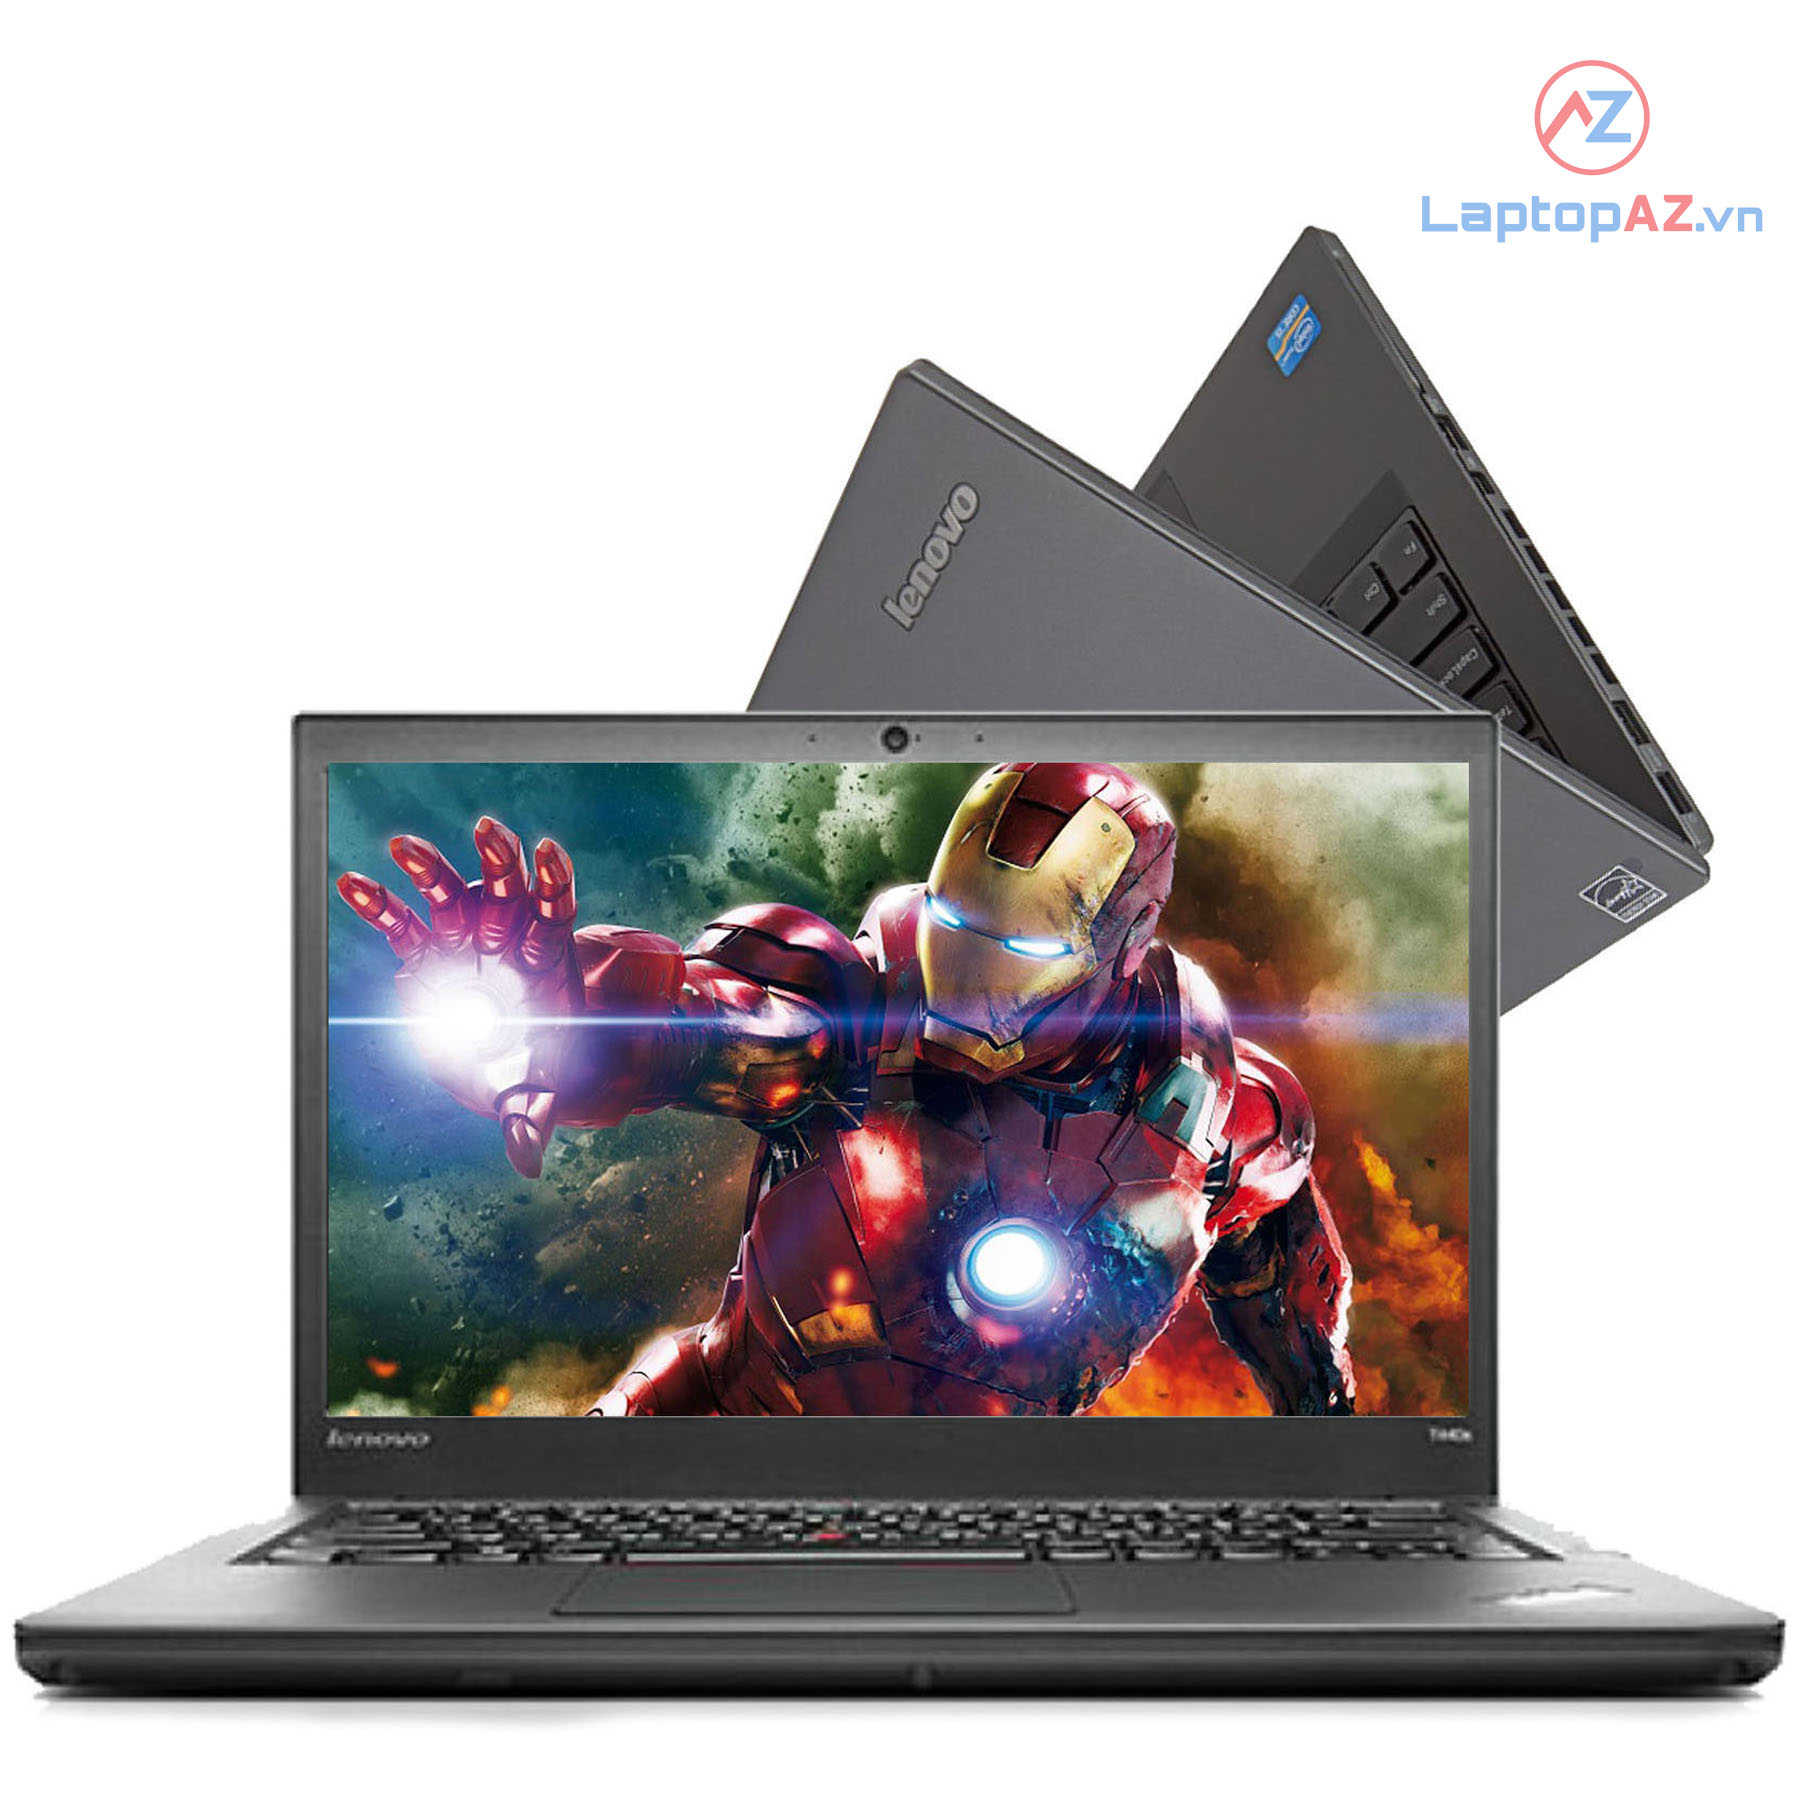 Laptop Lenovo Thinkpad T440s (Core i5-4300U, 8GB, 256GB, VGA intel HD Graphics 4400, 14 inch FHD IPS)